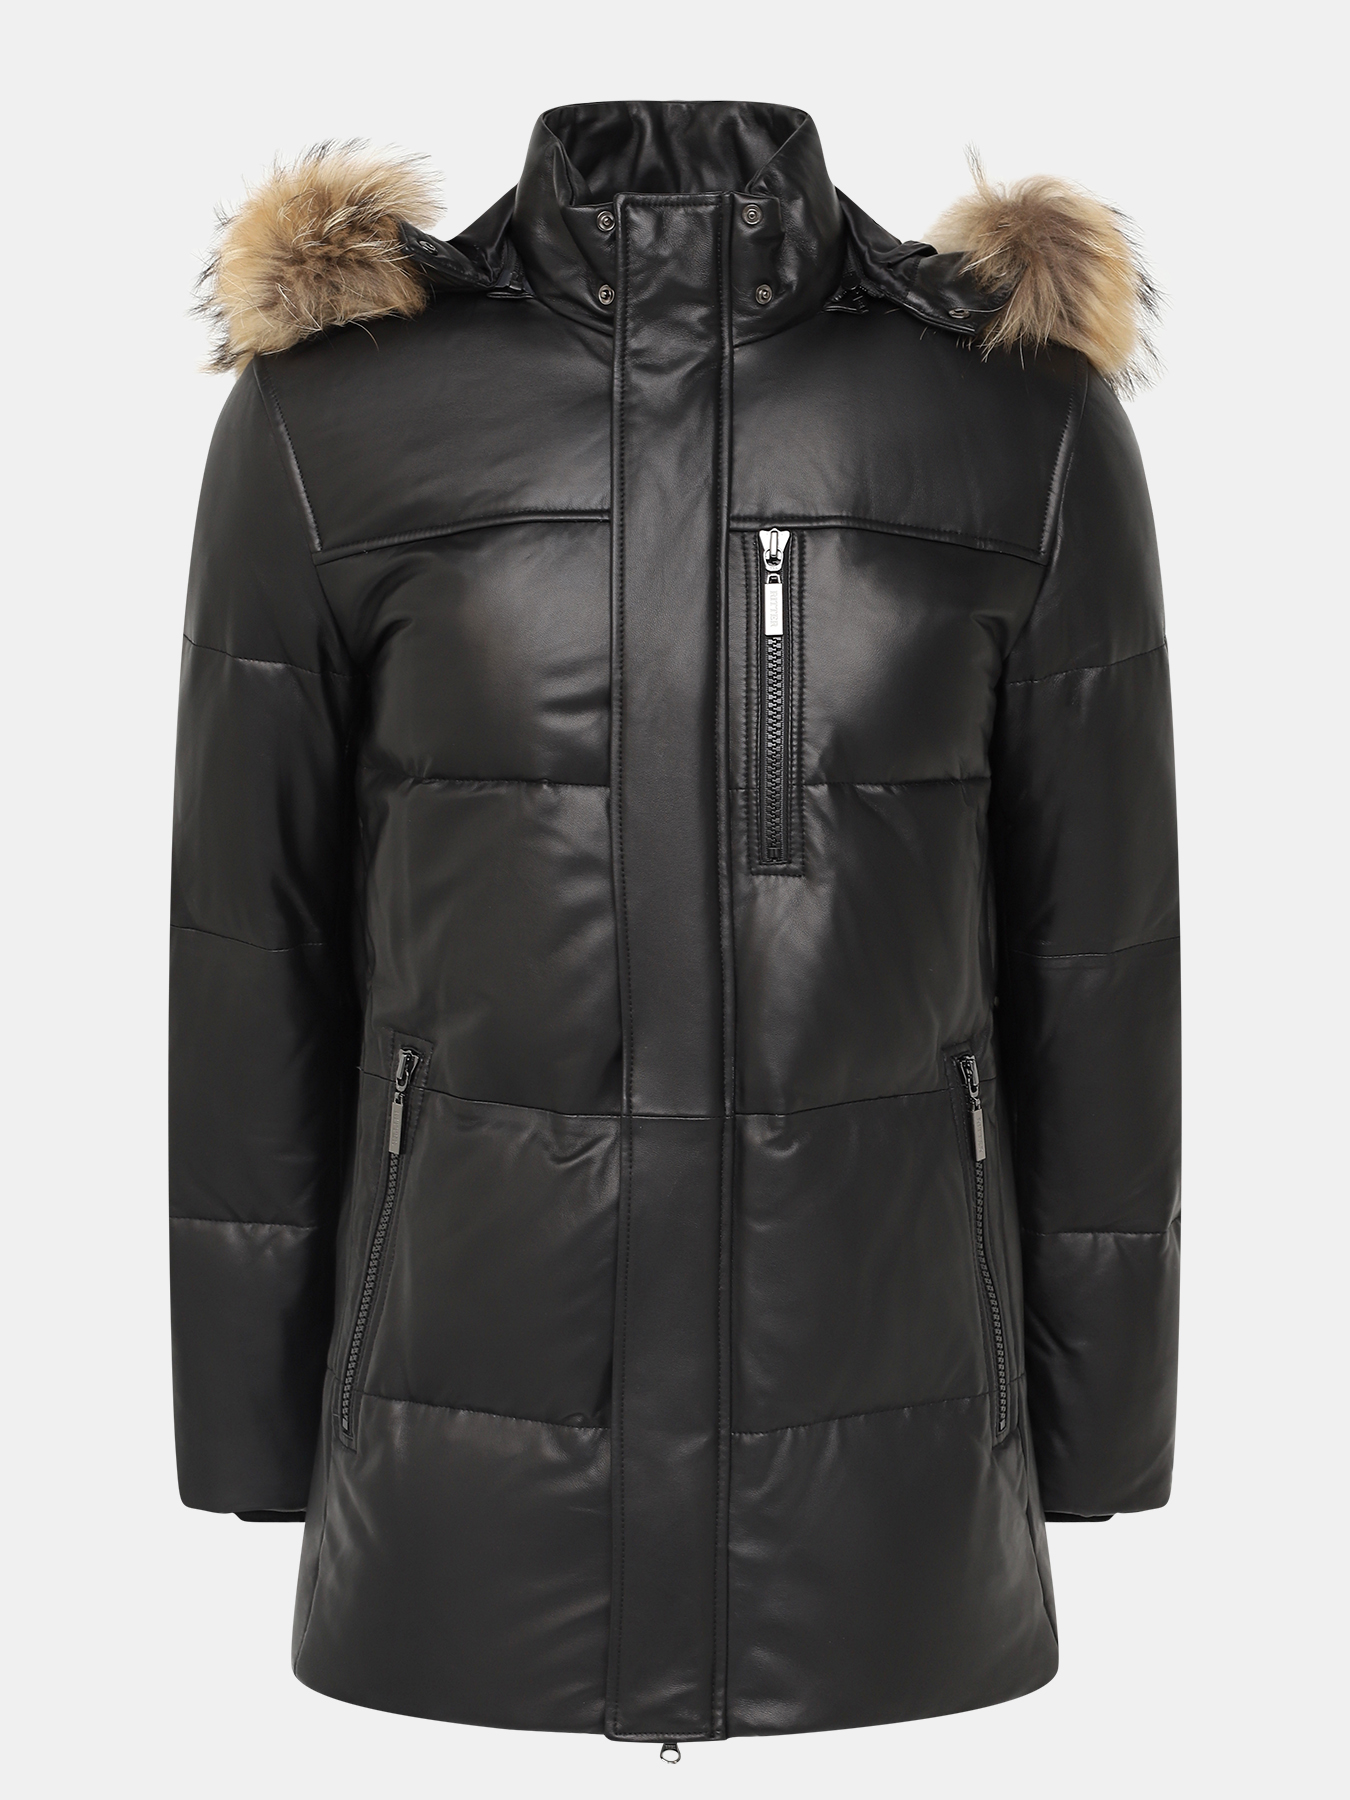 Кожаная куртка Ritter 390990-032, цвет черный, размер 62 - фото 1